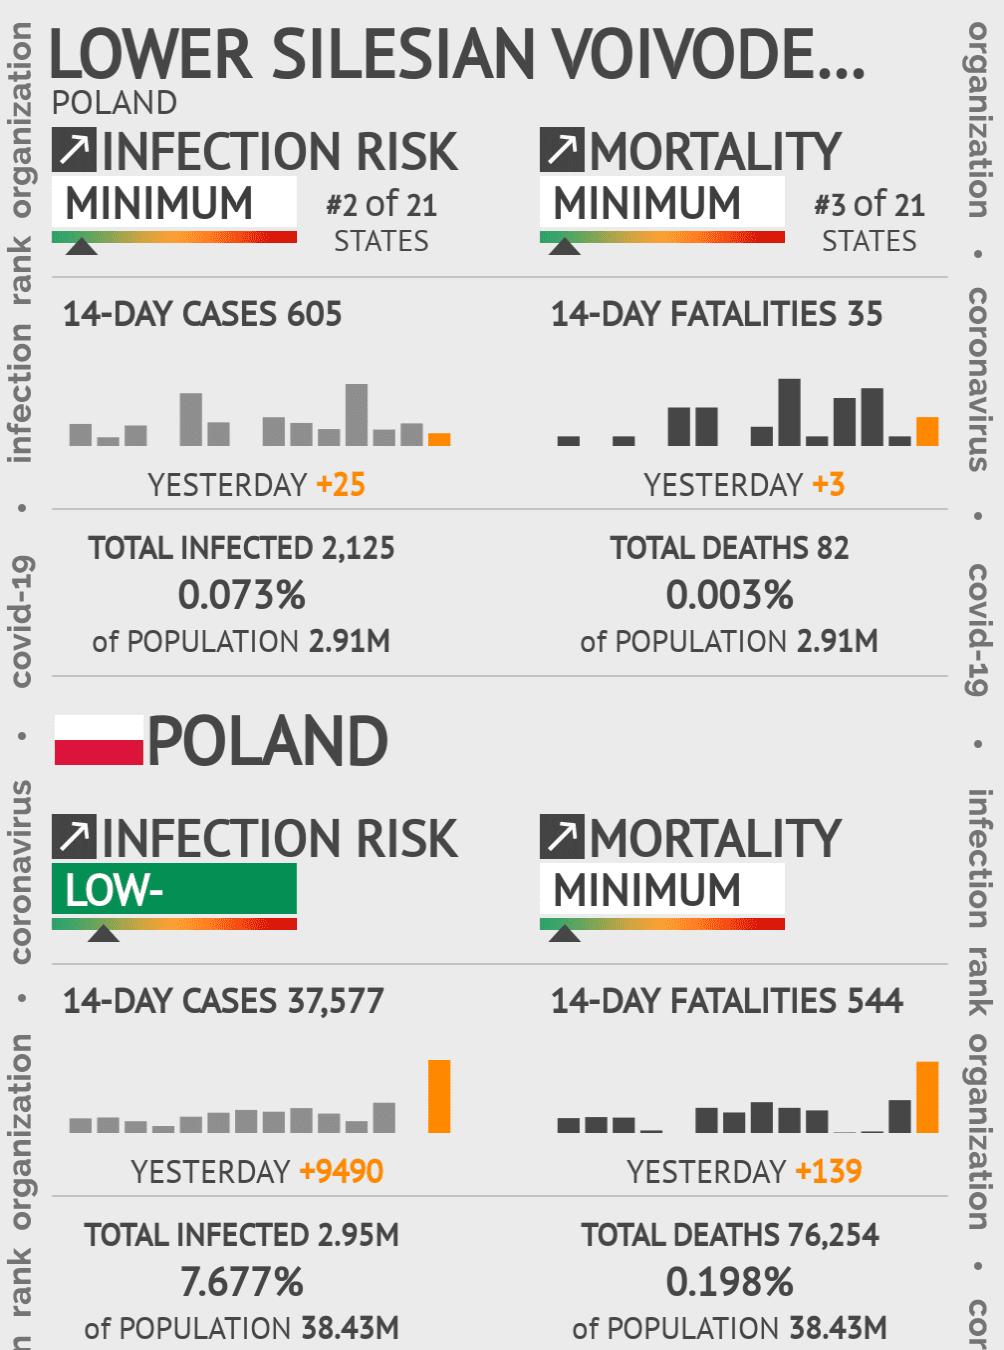 Lower Silesian Voivodeship Coronavirus Covid-19 Risk of Infection on May 14, 2020